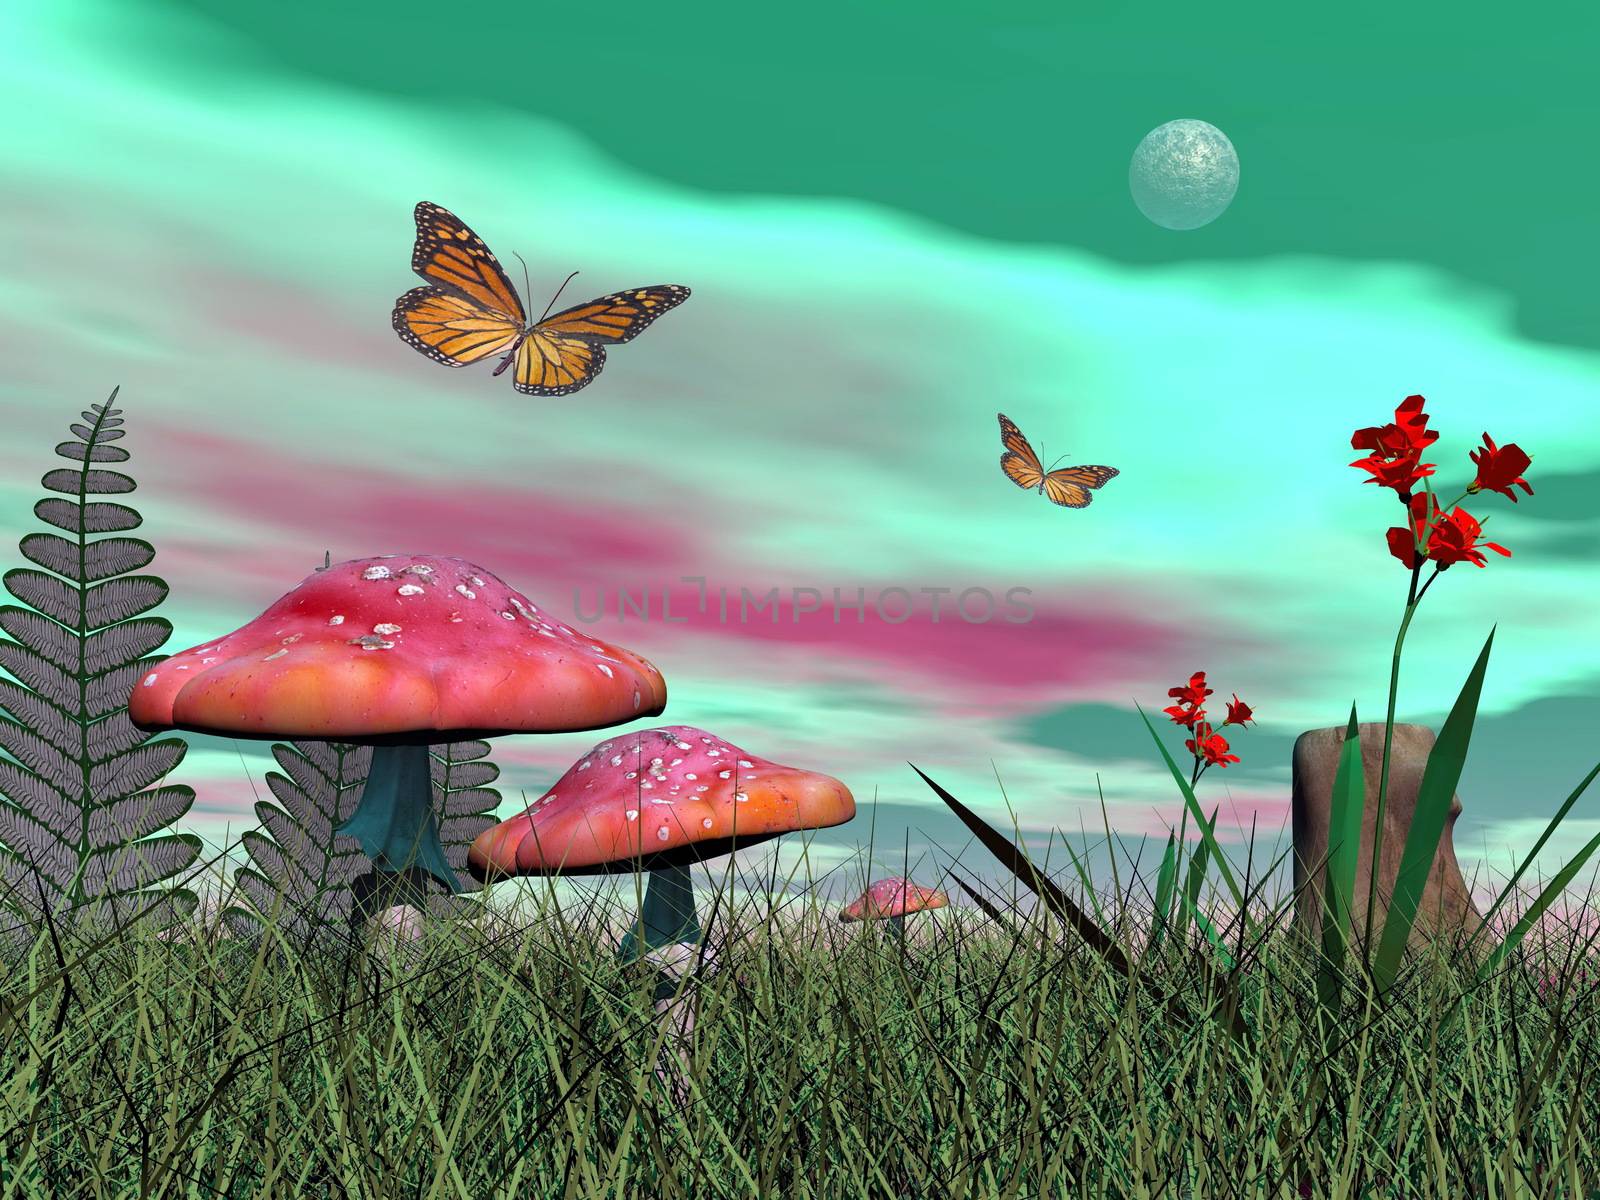 Fantasy garden - 3D render by Elenaphotos21